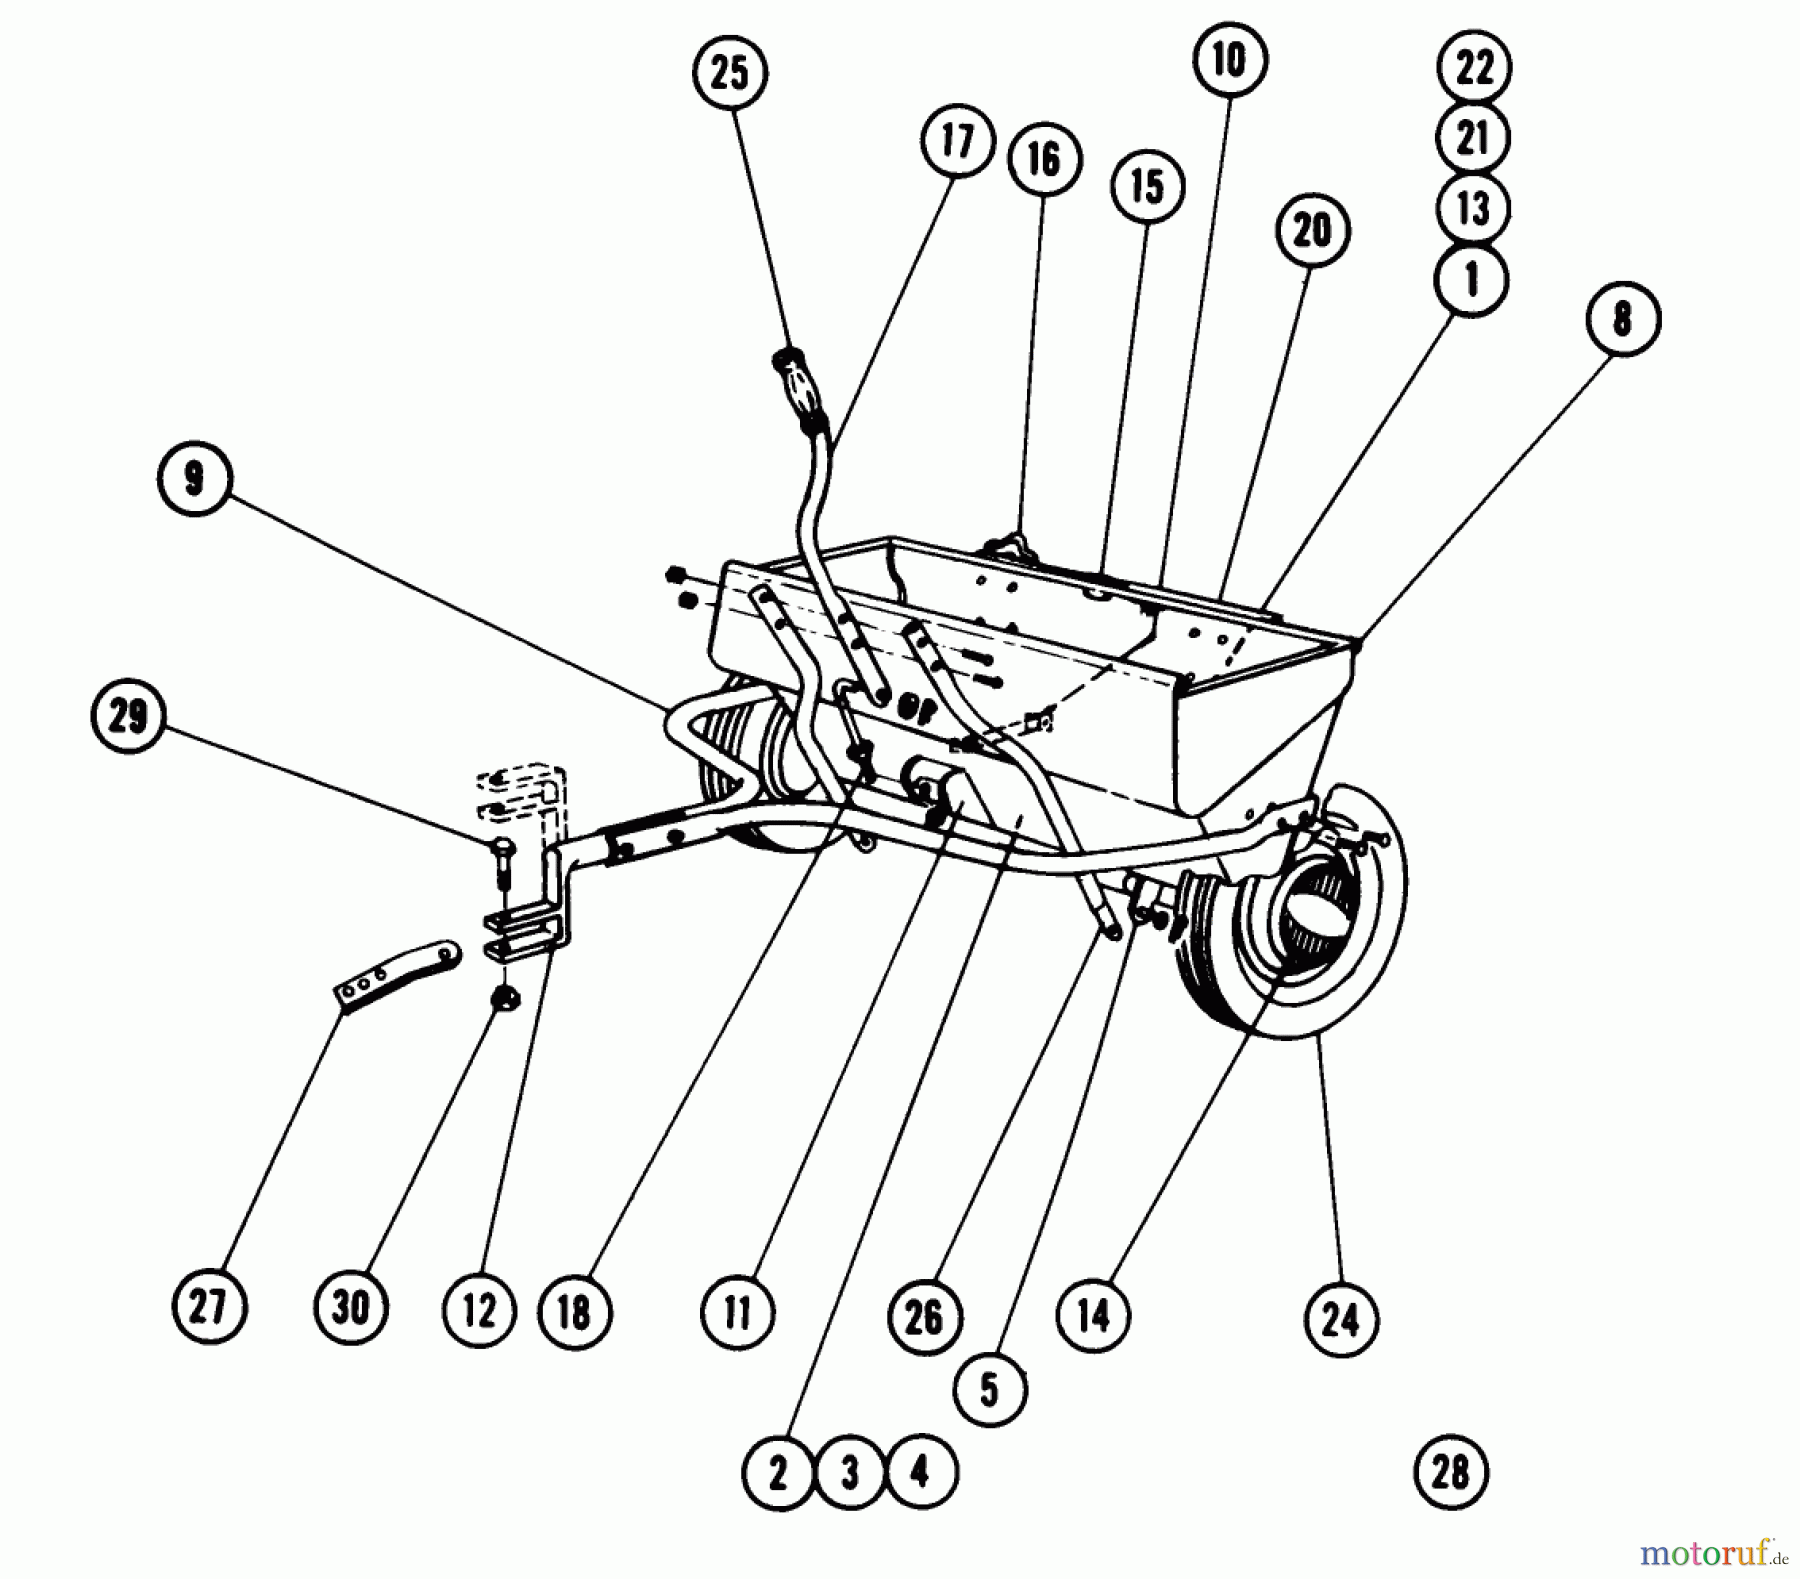  Toro Neu Utility Carts LTD-24 - Toro 5.5 Cubic Foot Cart, 1960 PARTS LIST #1